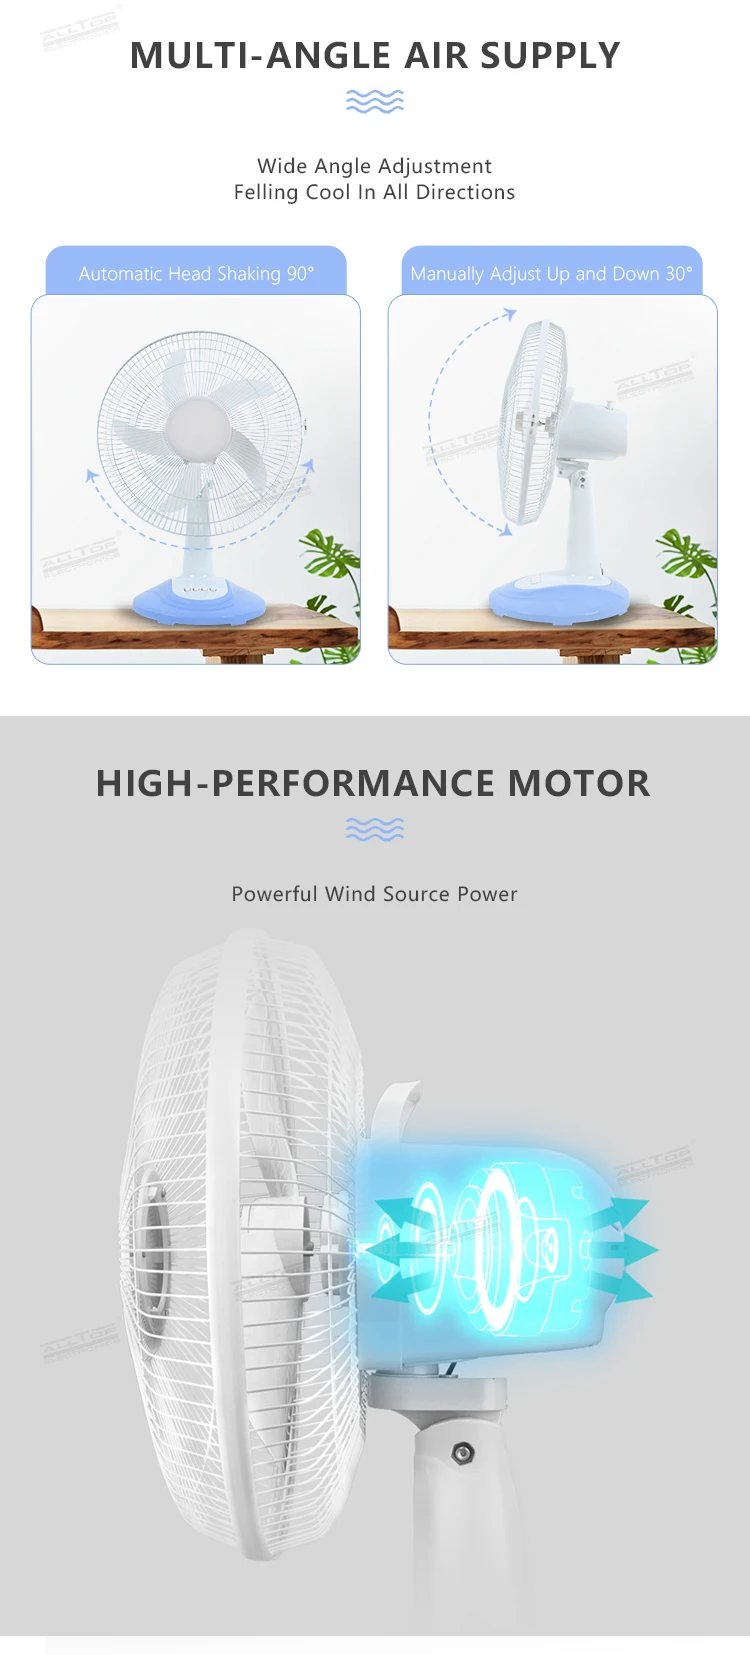 ALLTOP New design 16 inch three wind speed five blades rechargeable solar fan